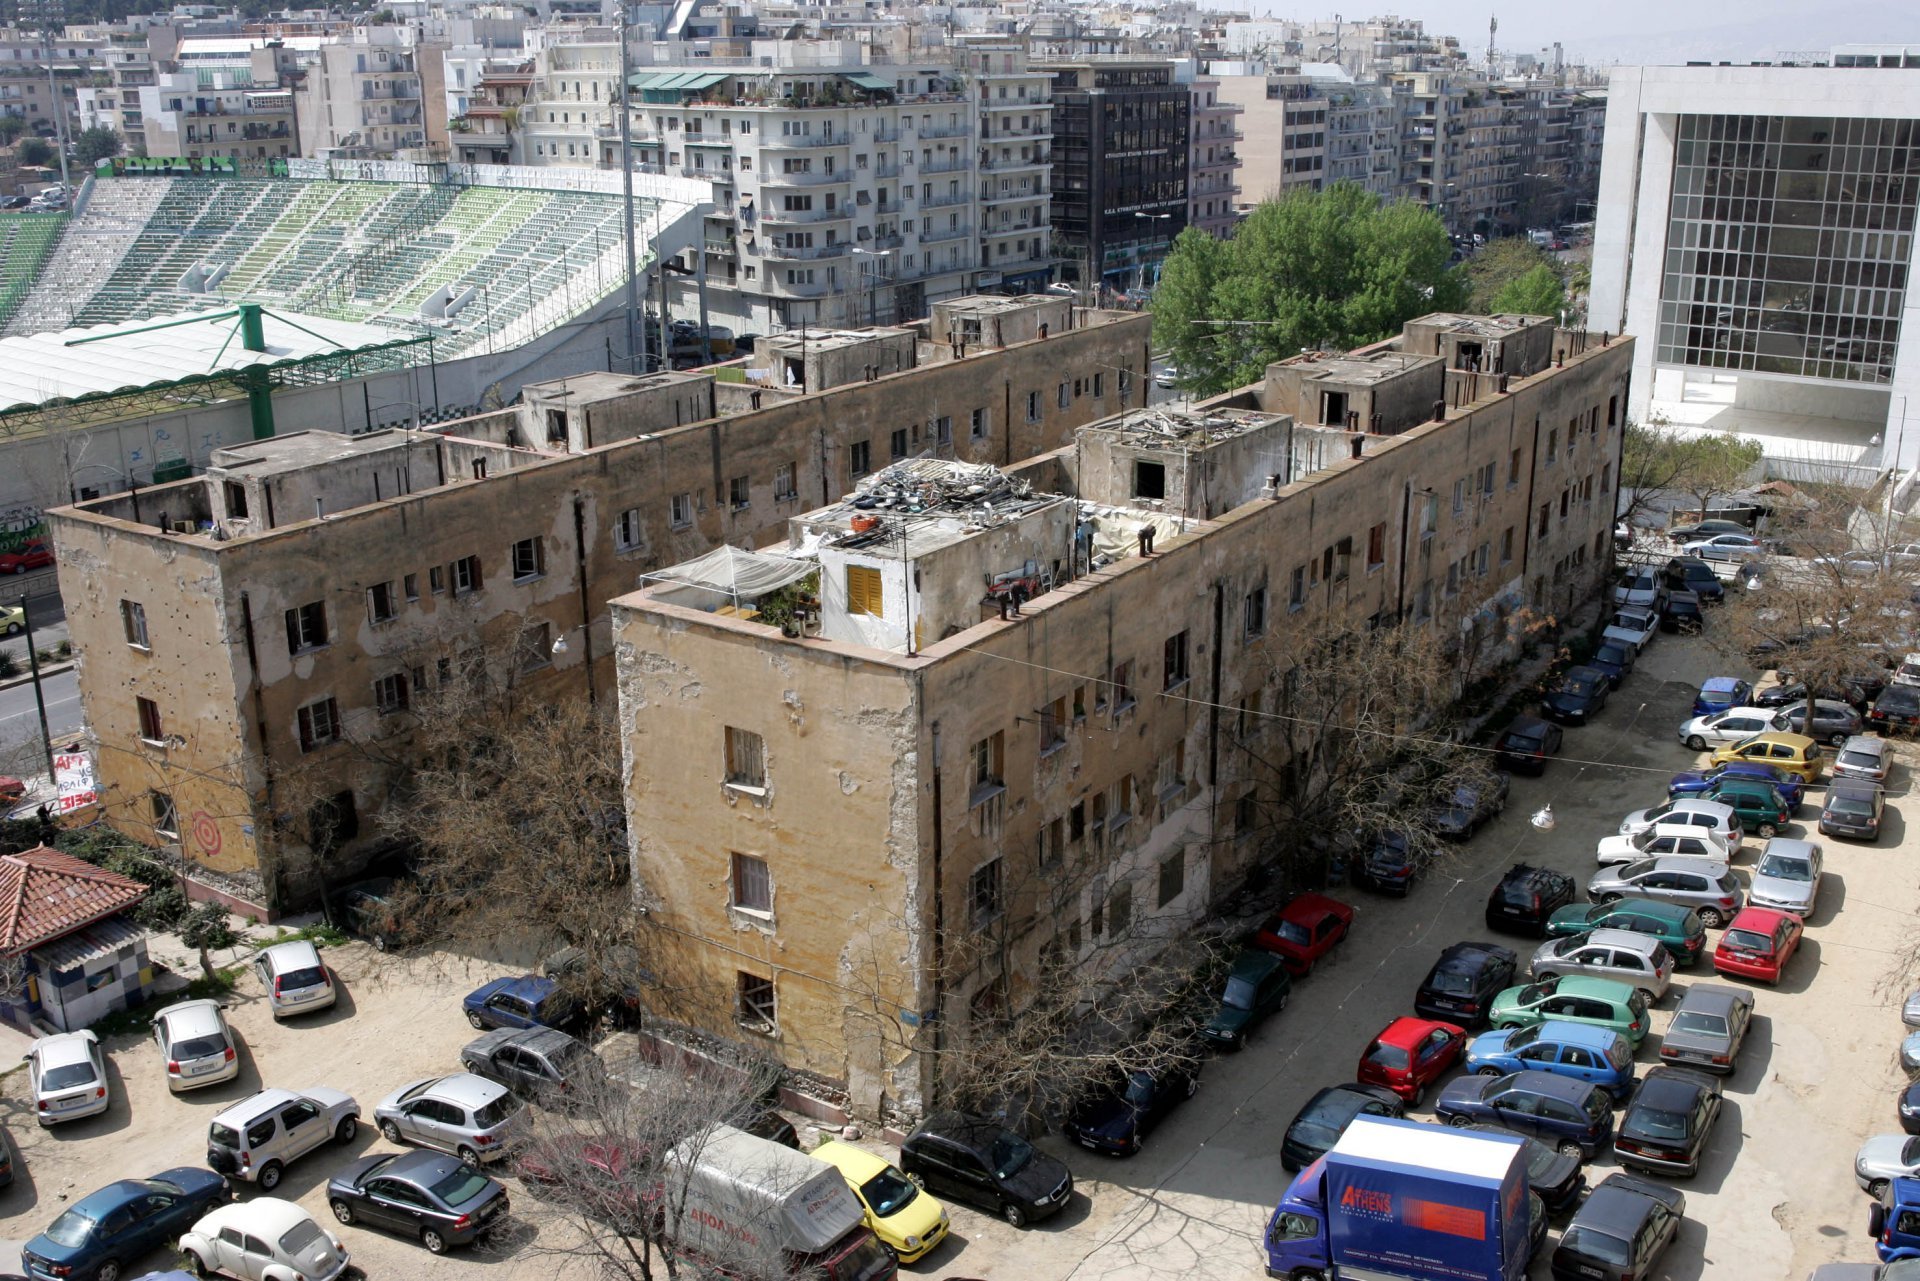 More information about "Ανάπλαση Αθήνας: Προκηρύχθηκε ο αρχιτεκτονικός διαγωνισμός για το κέντρο της Αθήνας"